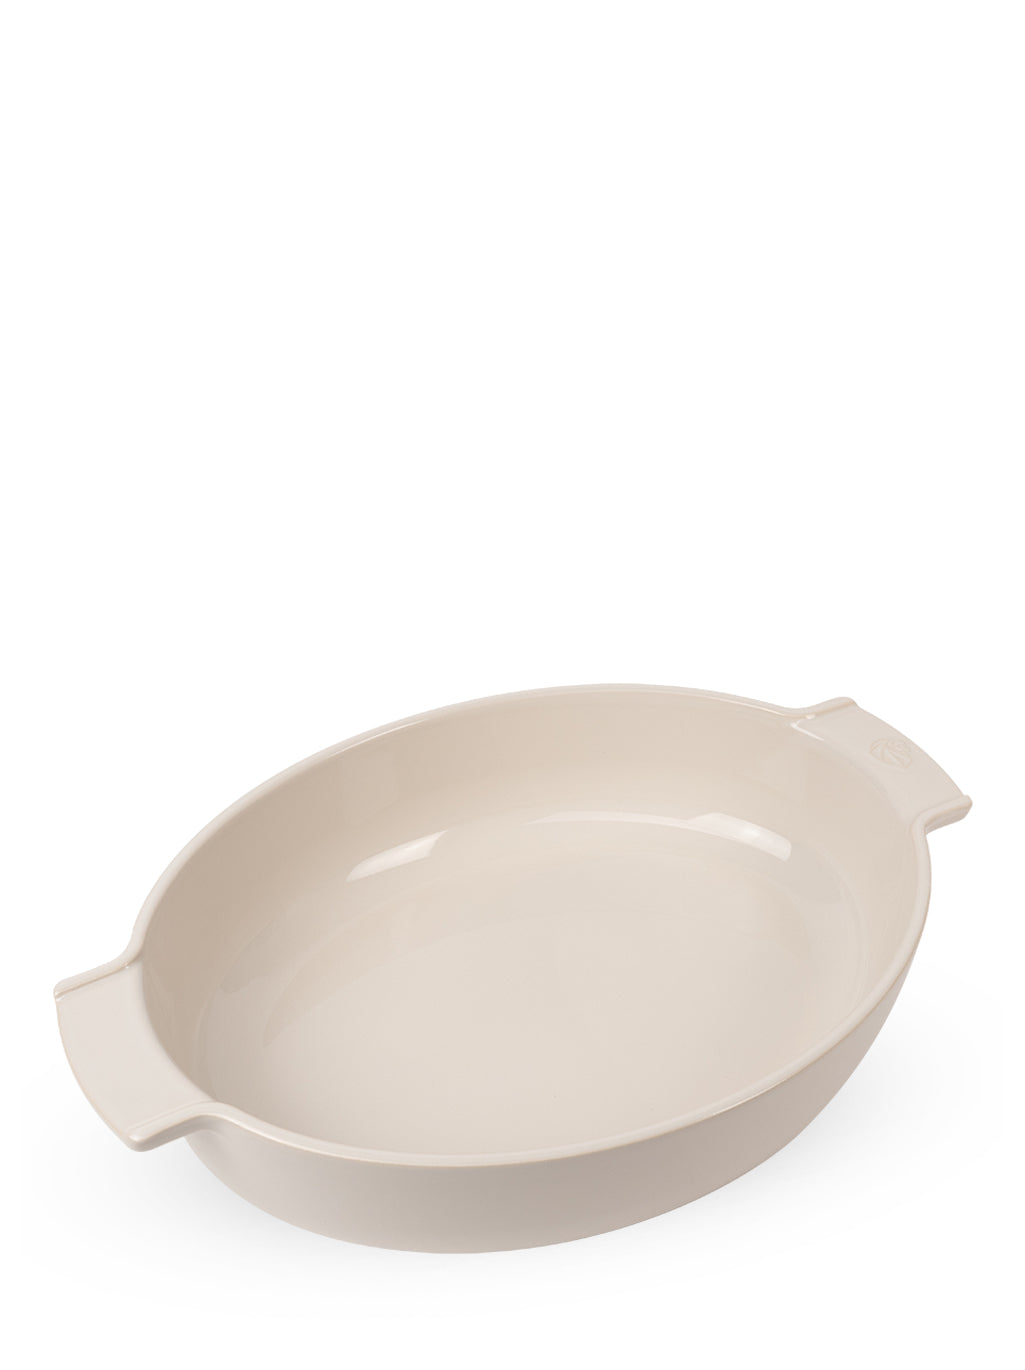 Peugeot Appolia Ceramic Oval Baking Dish 40cm